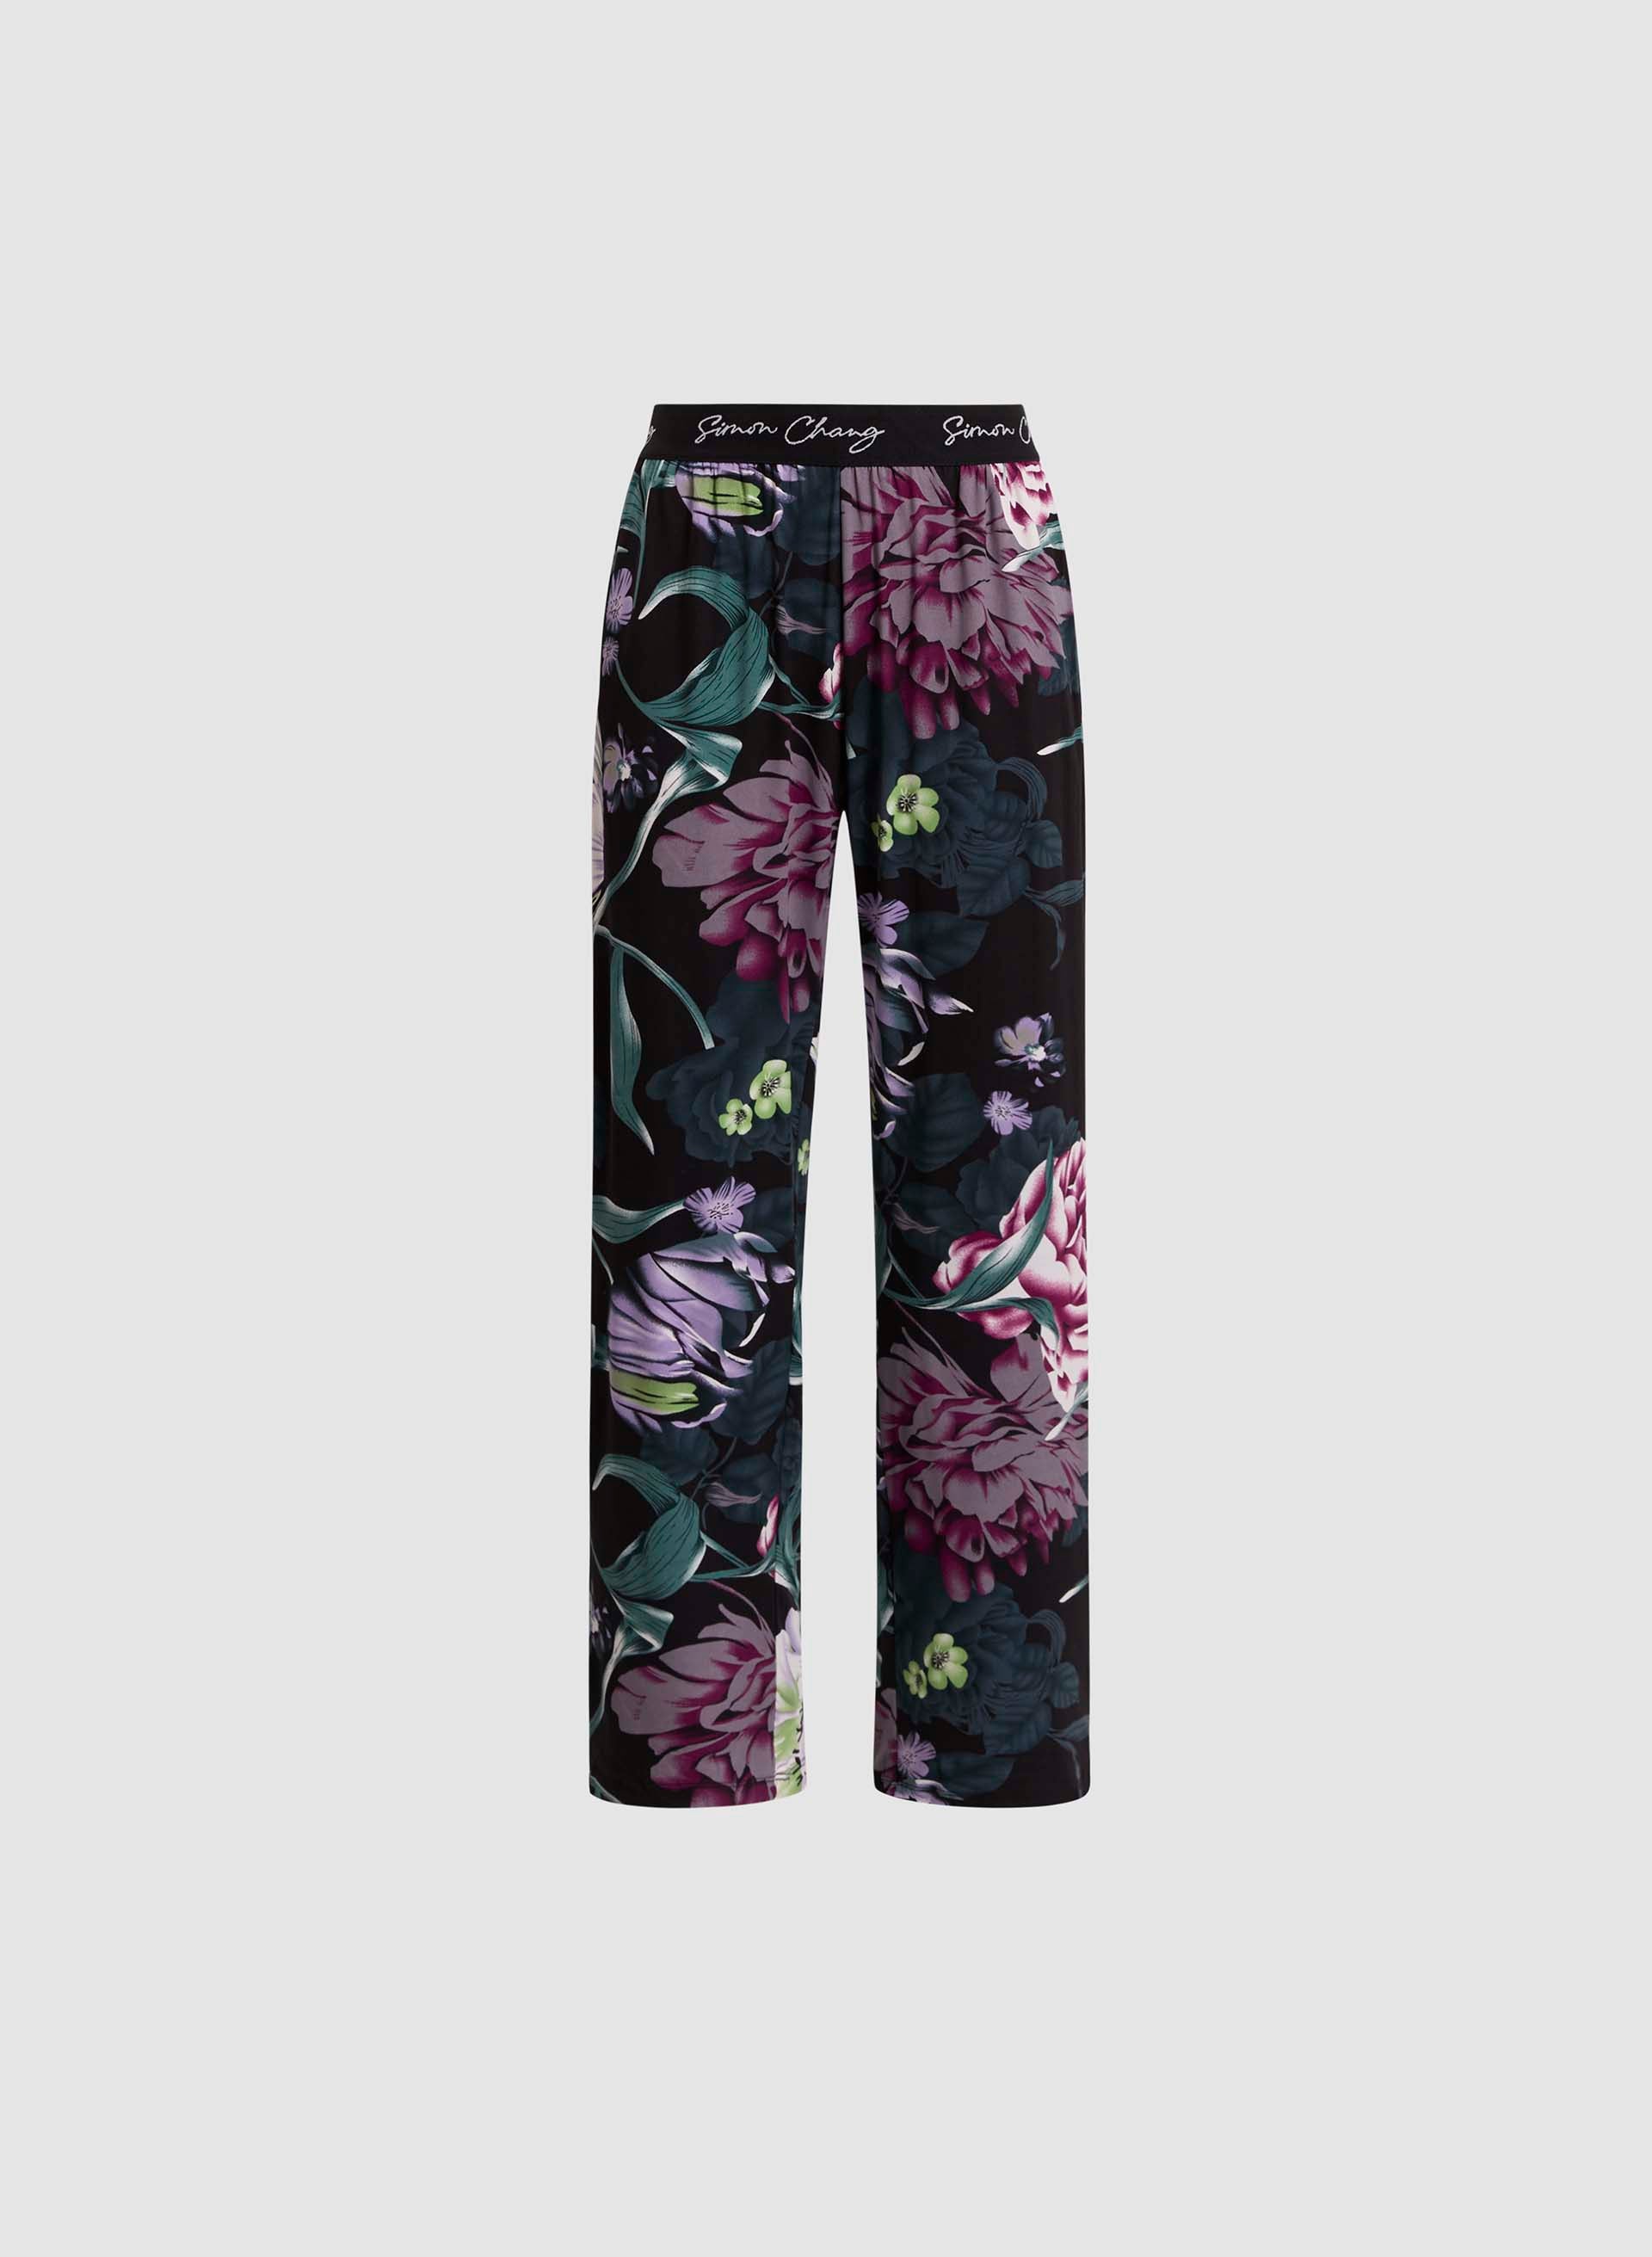 Simon Chang - Floral Motif Pyjama Set